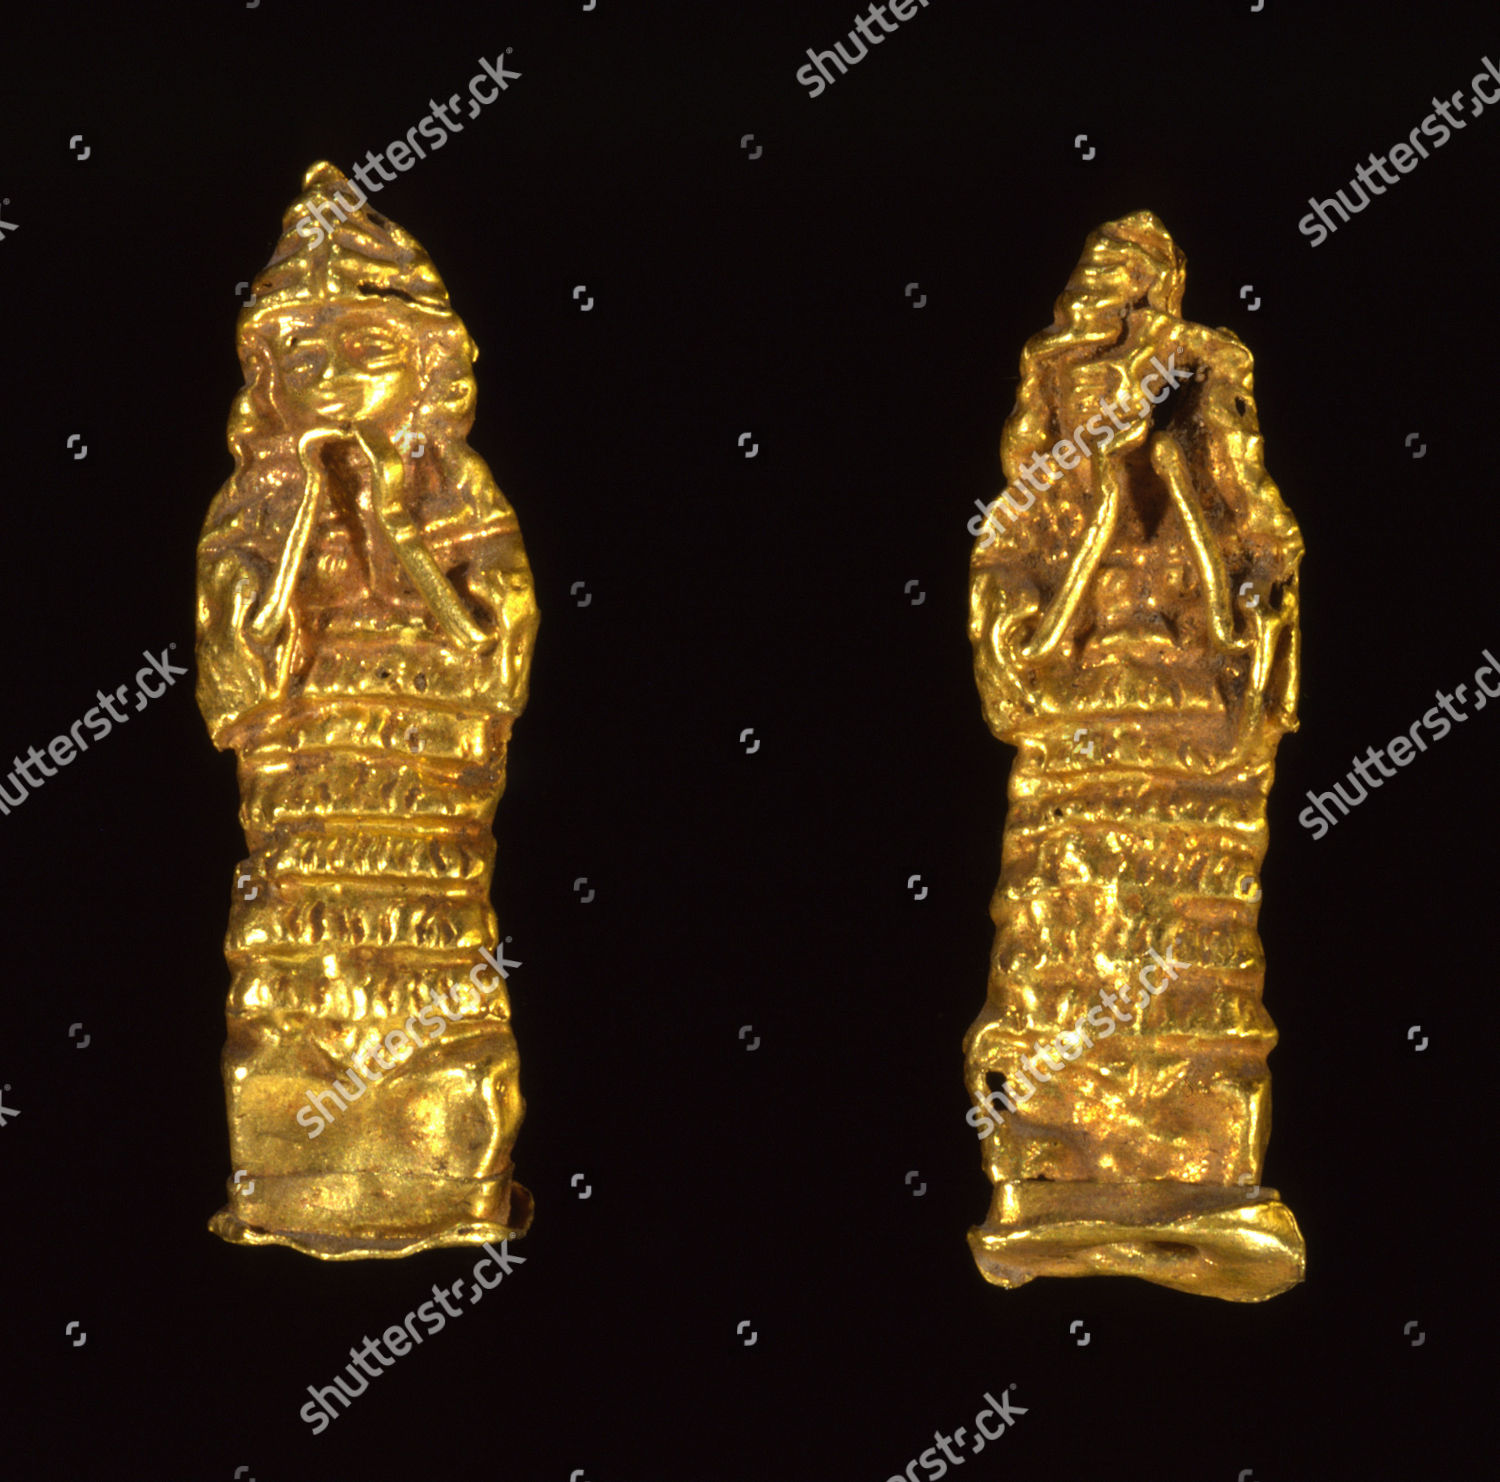 1f - golden statues of praising goddess Ninsun, daughter to Bau & Ninurta; she is found in hundreds of artifacts with semi-divine kings & alien gods